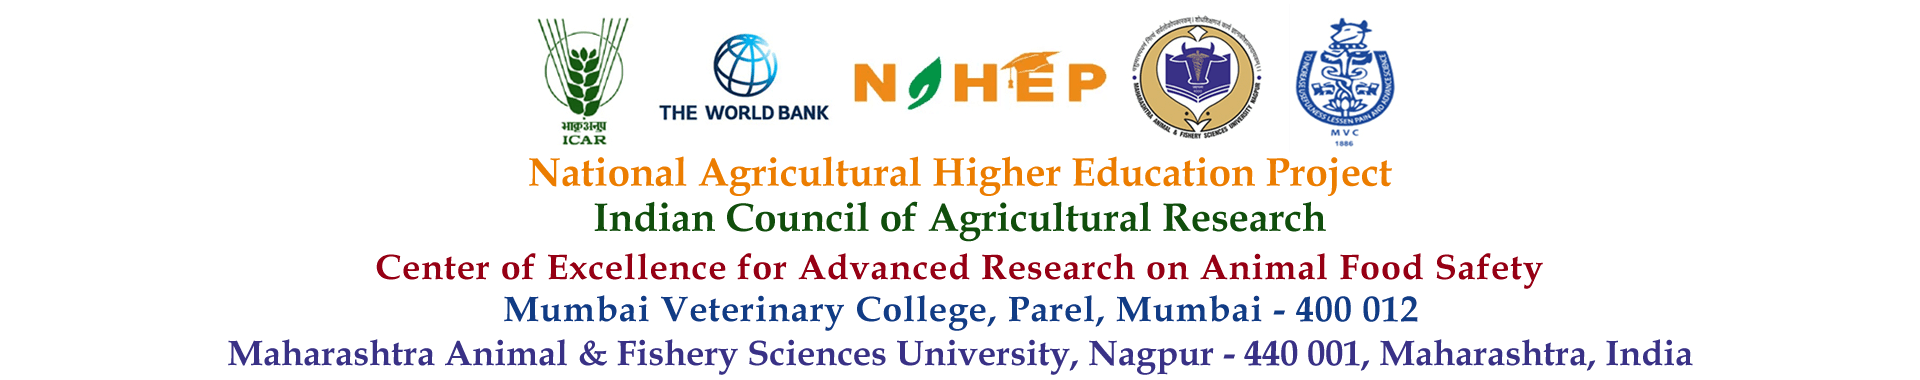 NAHEP Mumbai - National Agricultural Higher Education Project